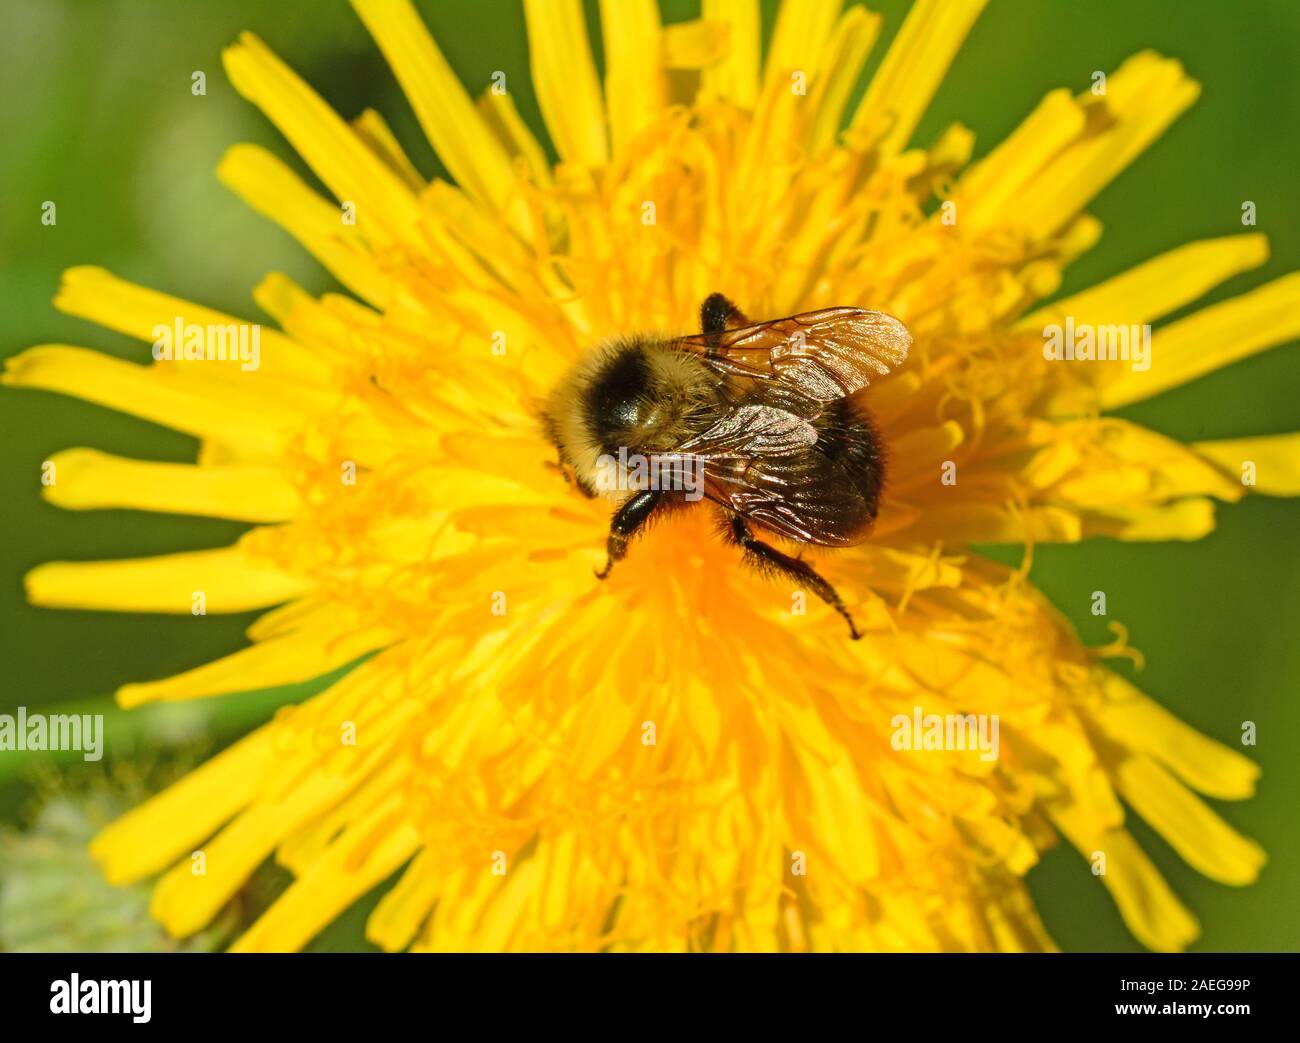 bumble bee on yellow flower Stock Photo